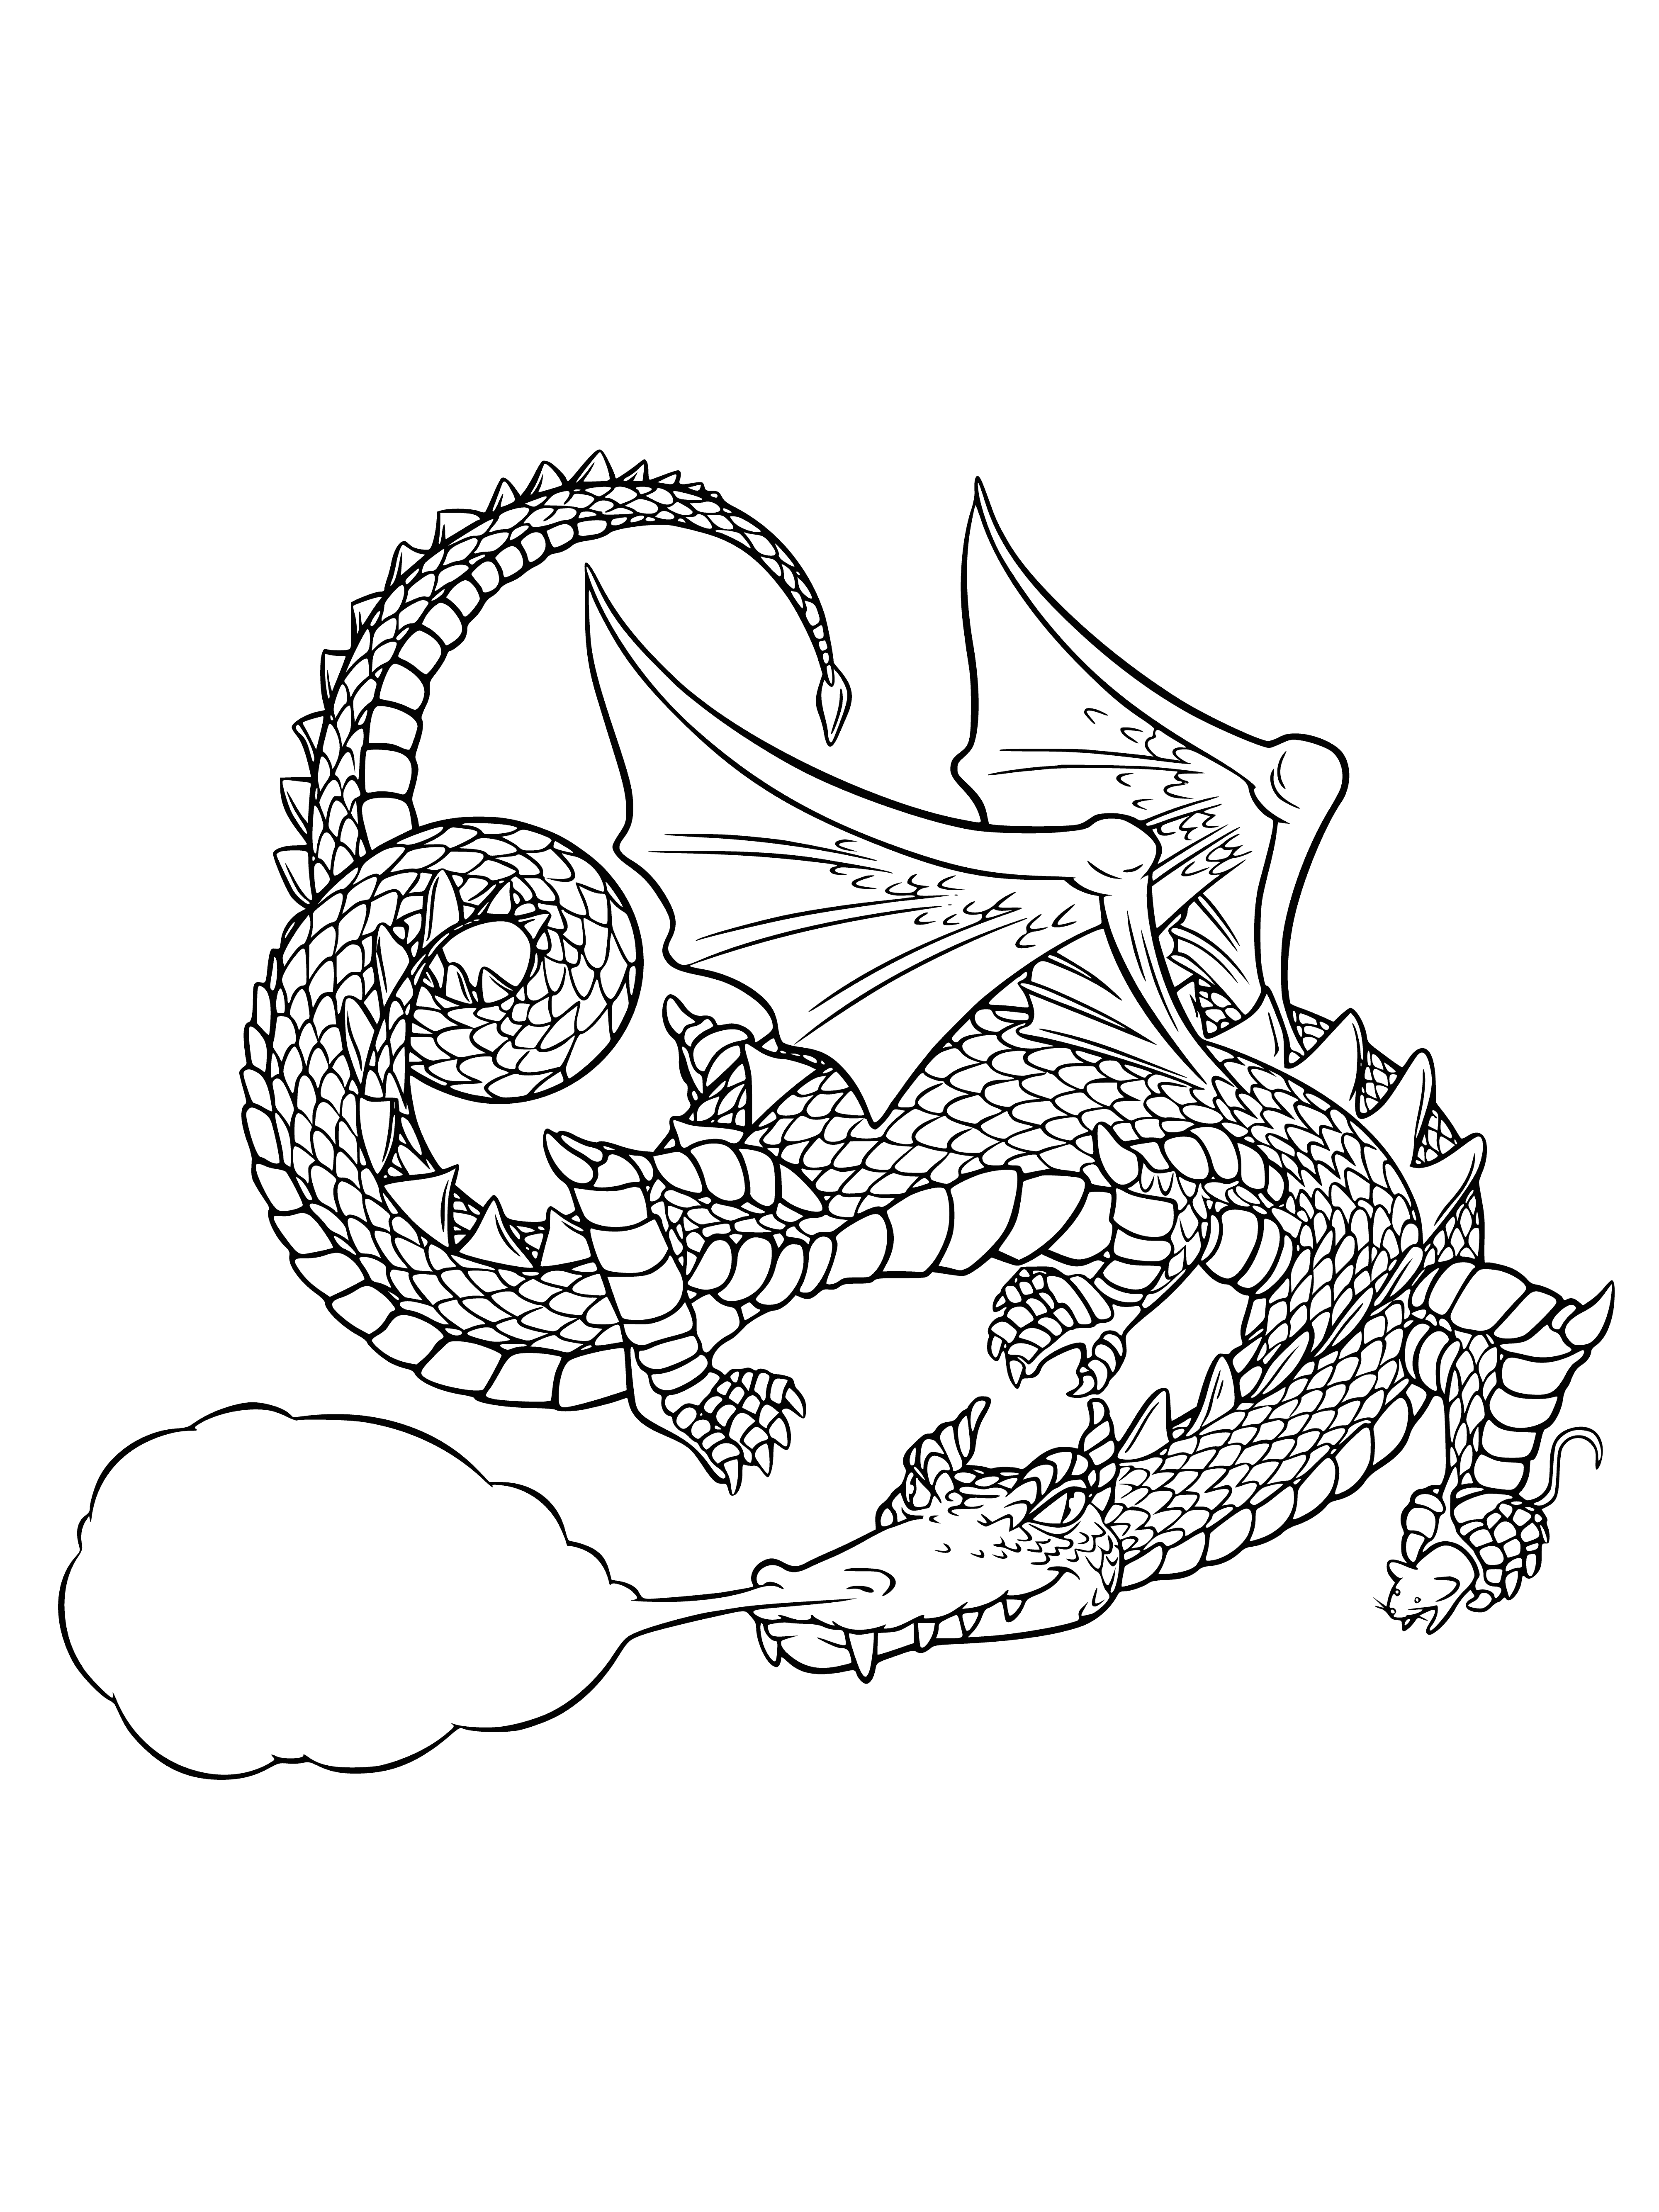 Le dragon coloriage